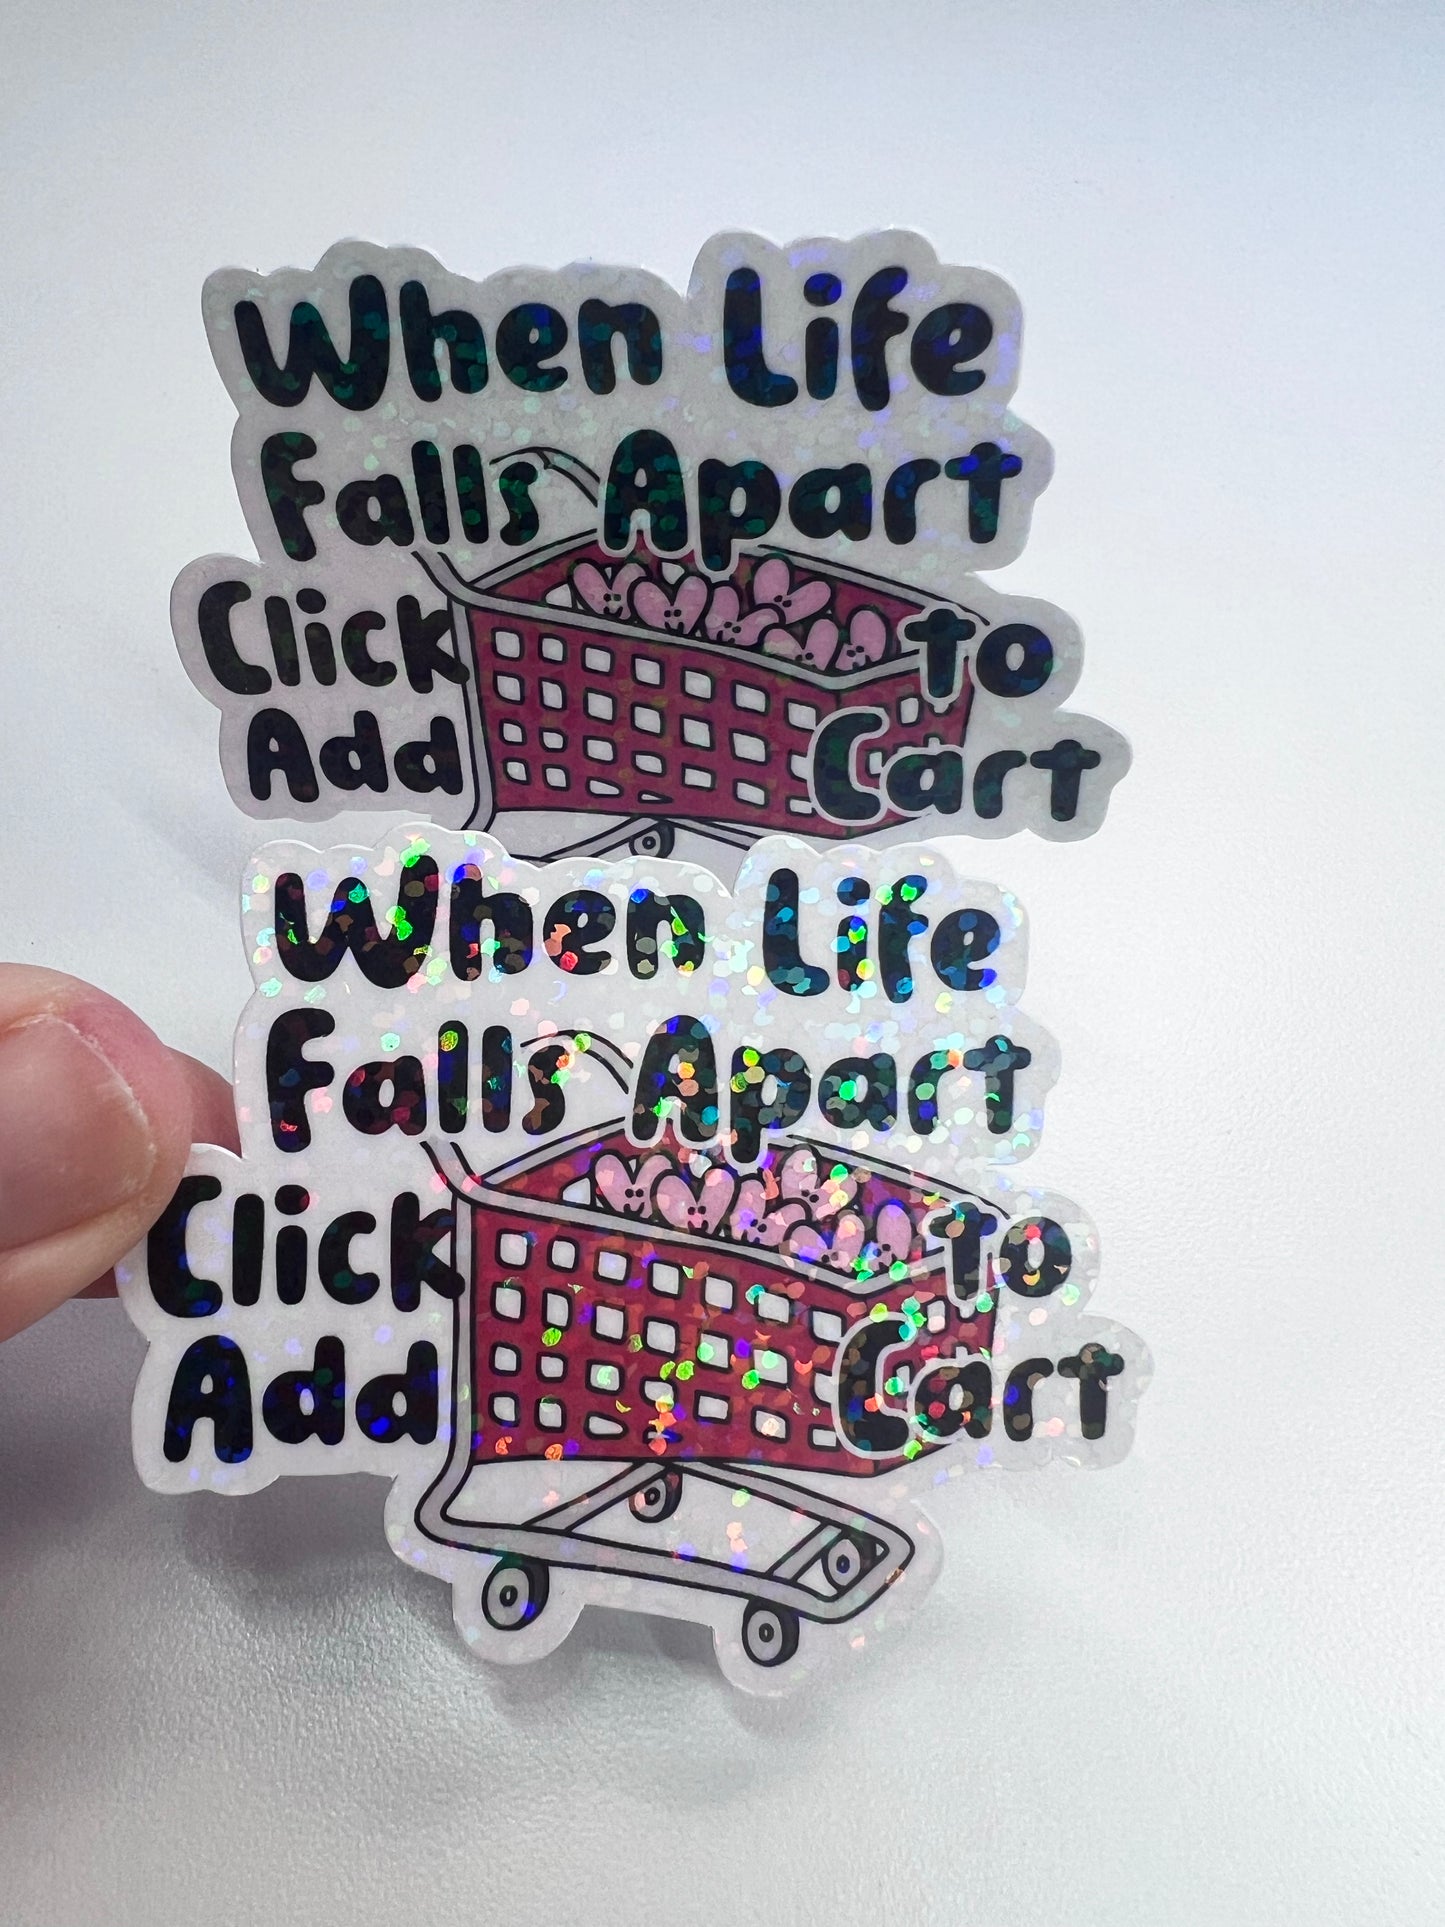 When Life Falls Apart Add To Cart Die Cut Sticker